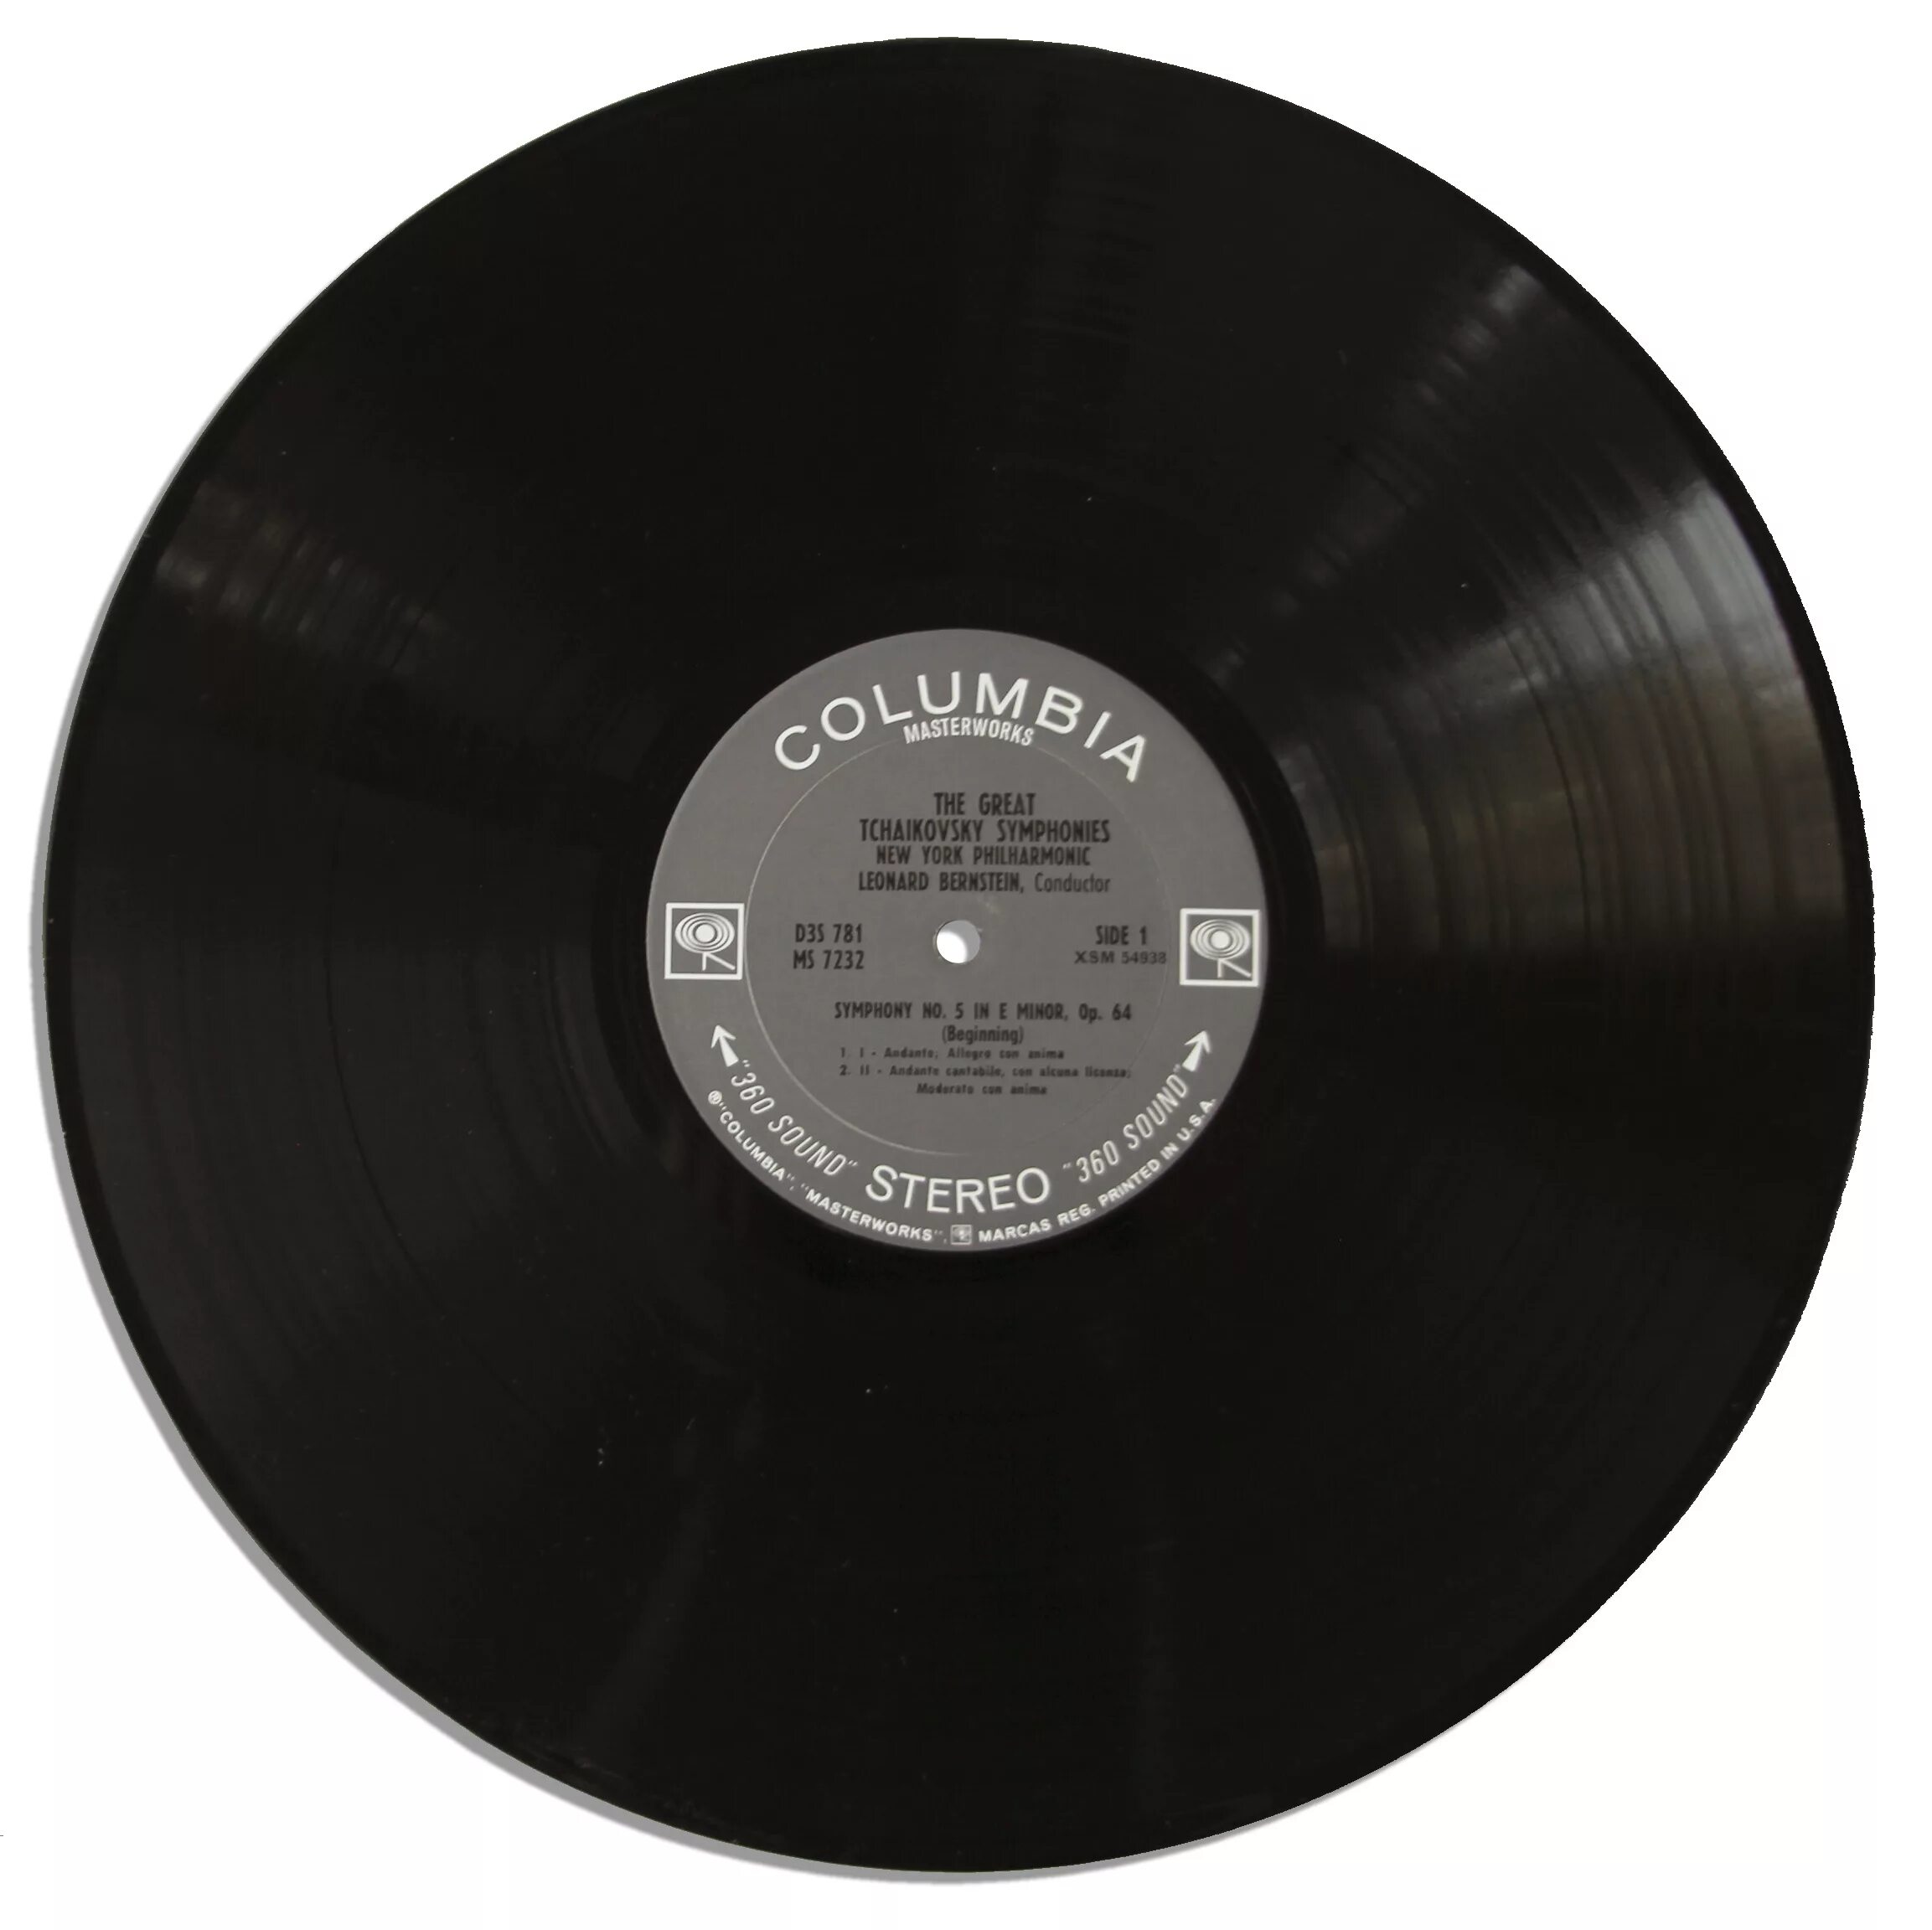 Jazz LP Vinyl 1978. LP records. Silver Beatles LP Vinyl. LP records 1981. Купить виниловые lp